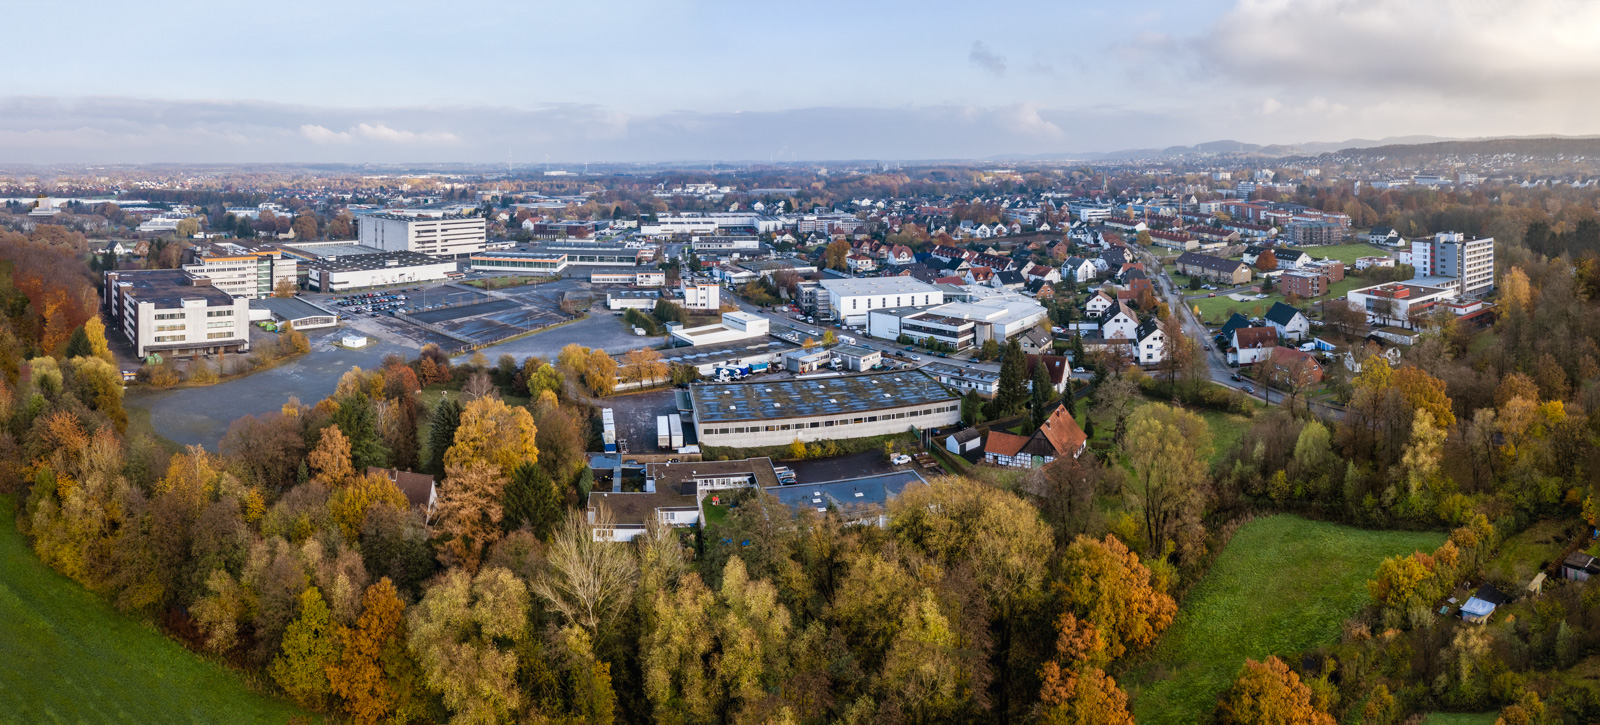 Aerial photograph of Bielefeld-Stieghorst in November 2019.